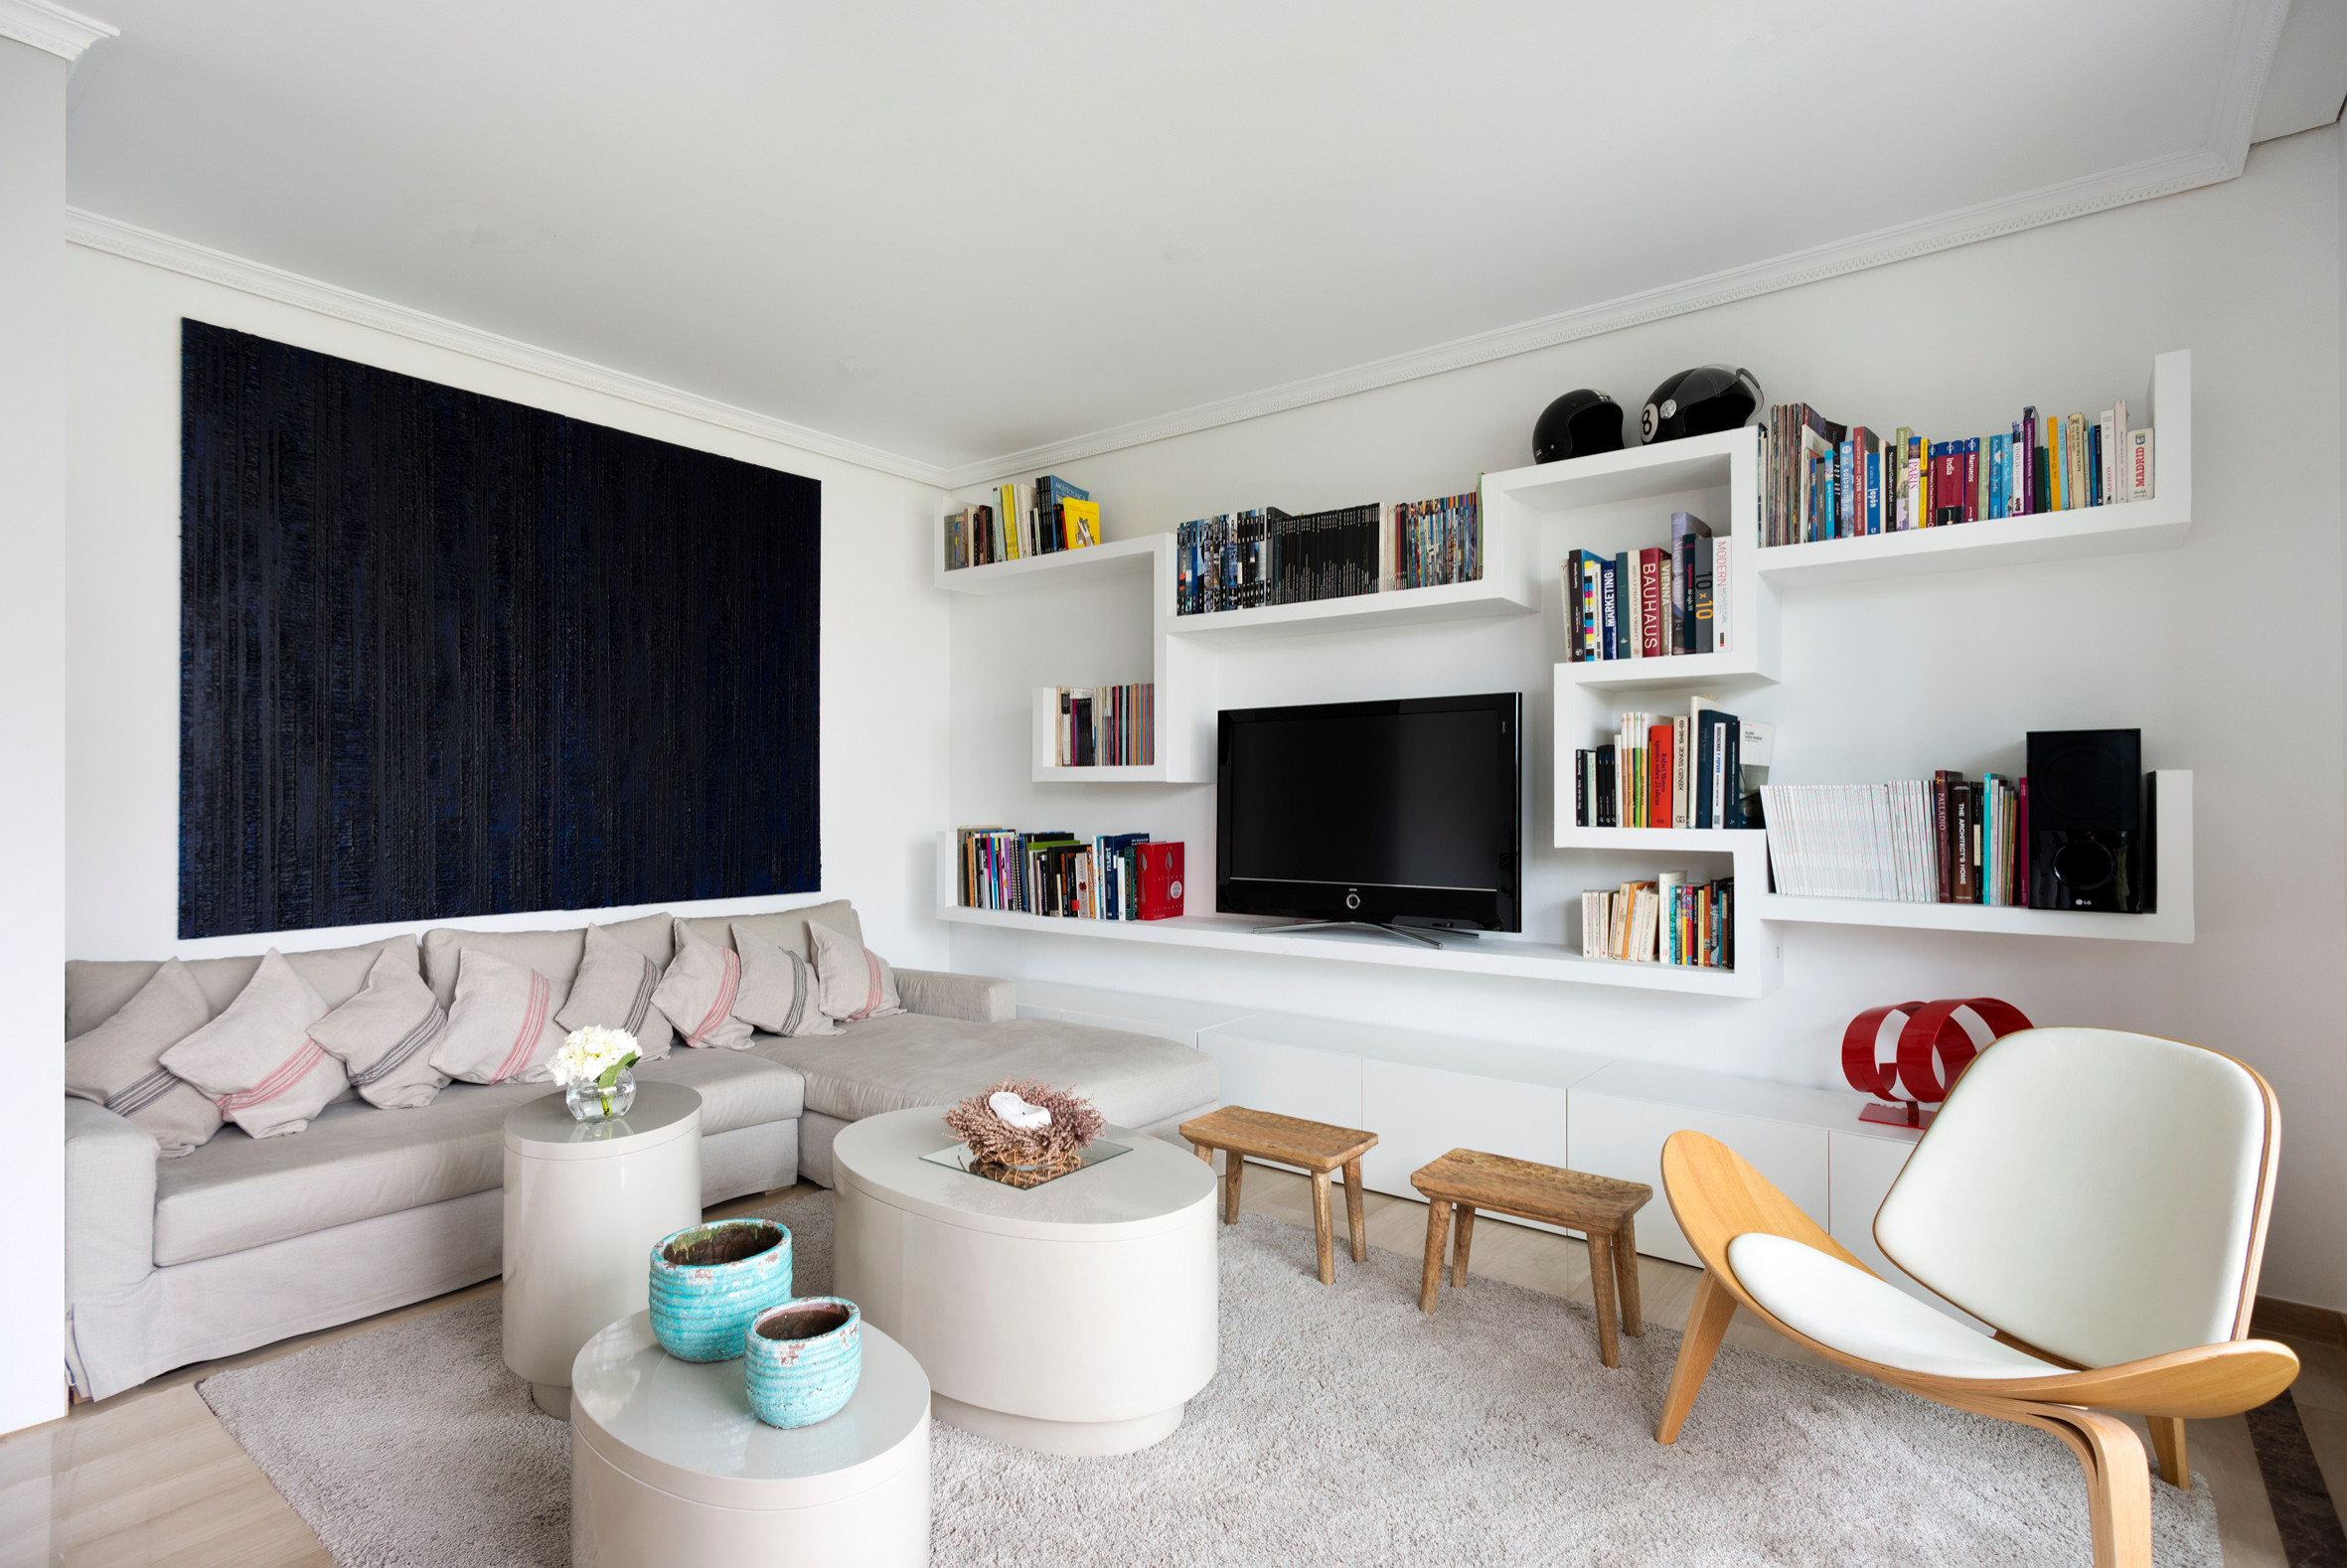 malt Stoop code 75 Marble Floor Living Room Library Ideas You'll Love - October, 2022 |  Houzz